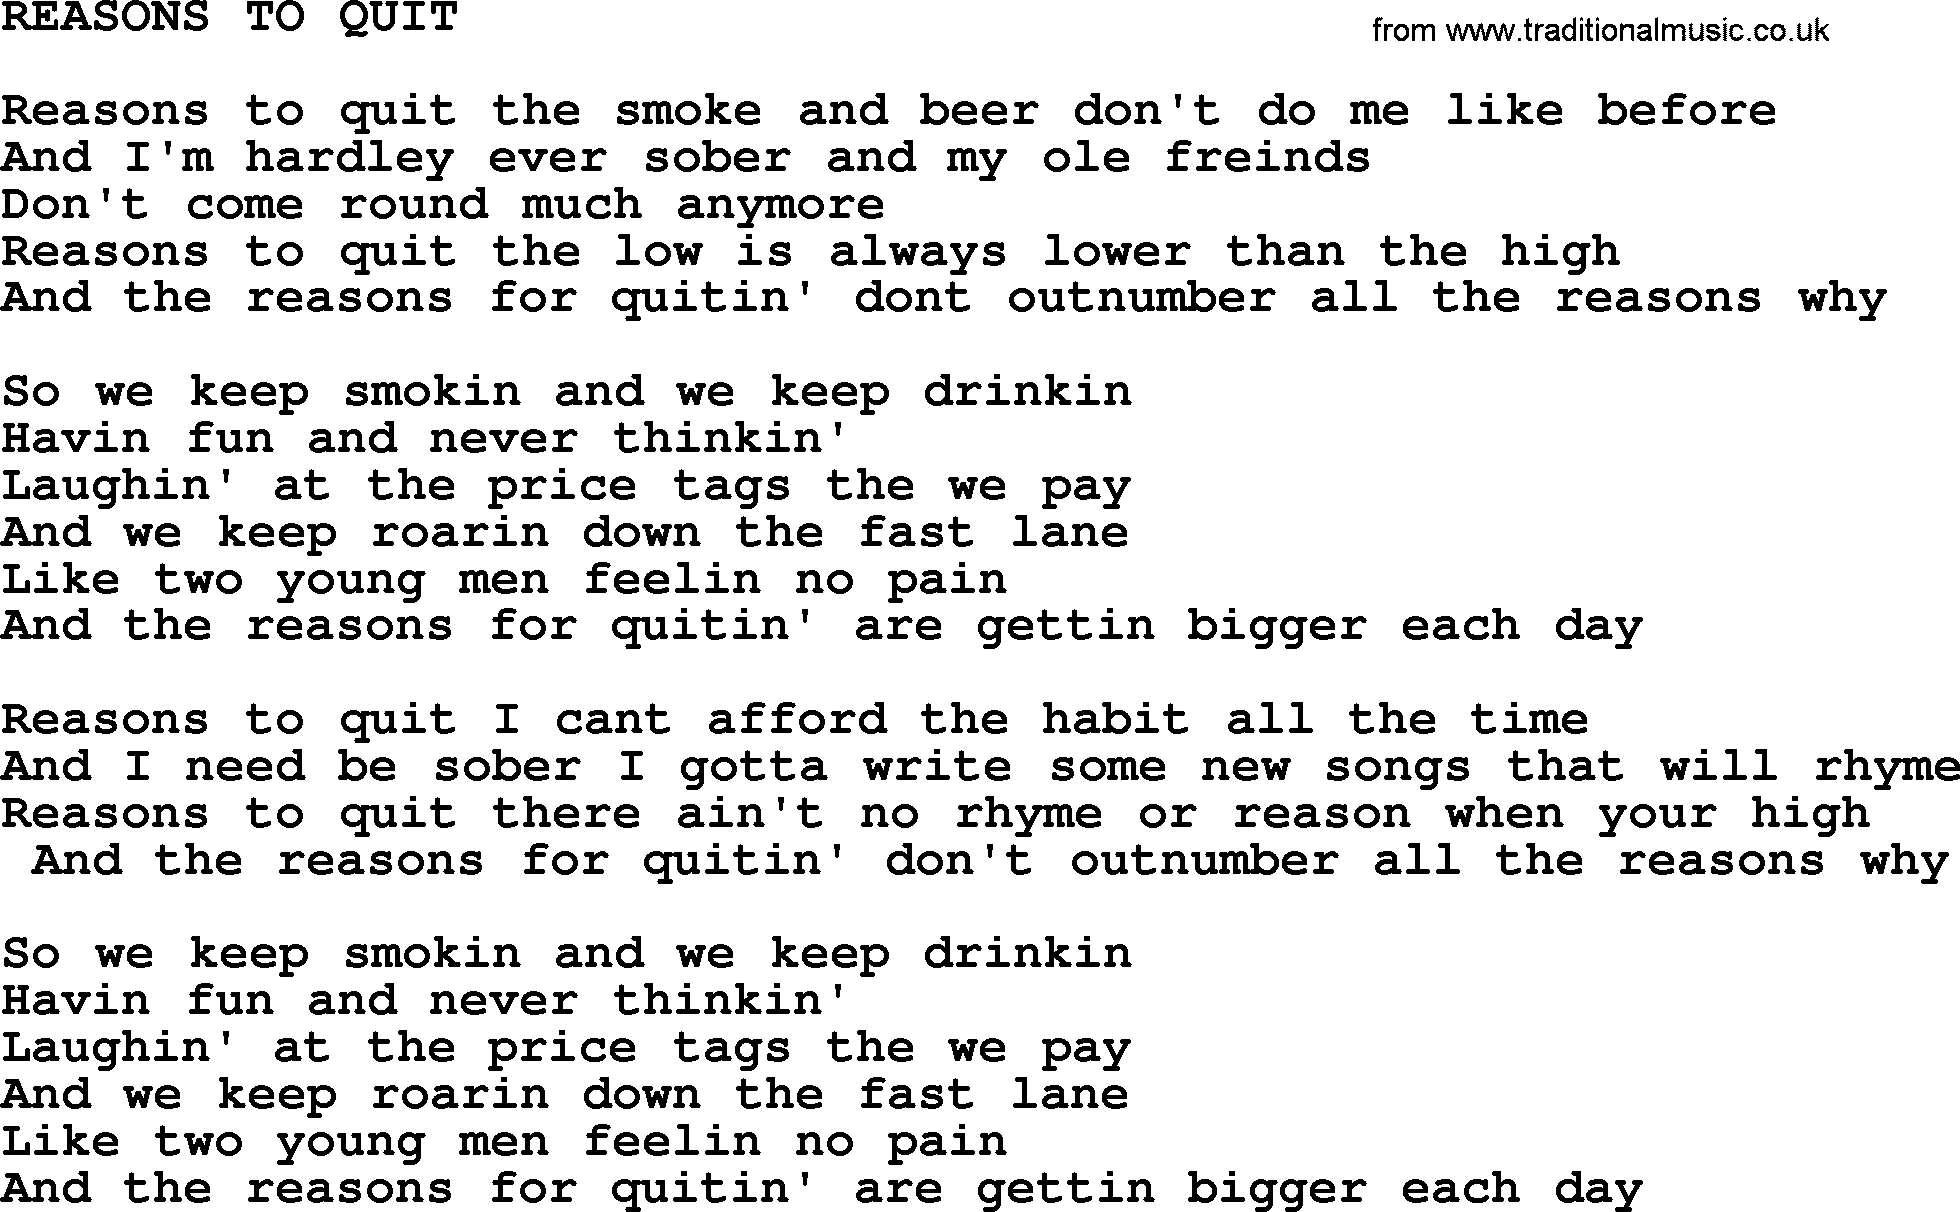 Merle Haggard song: Reasons To Quit, lyrics.